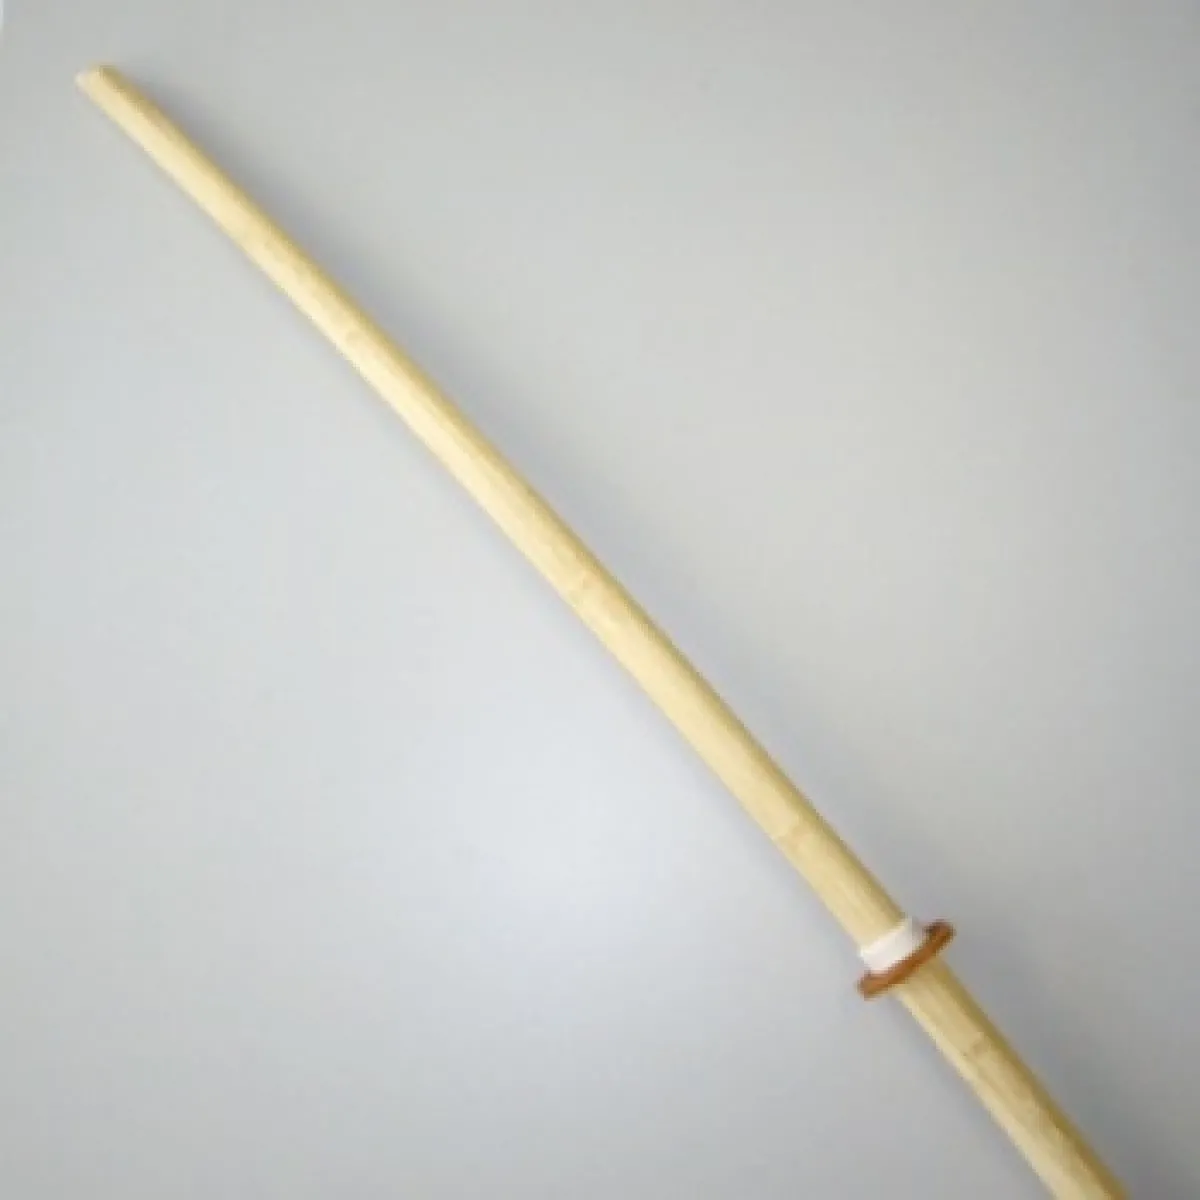 Bokken sabre en bois de bambou